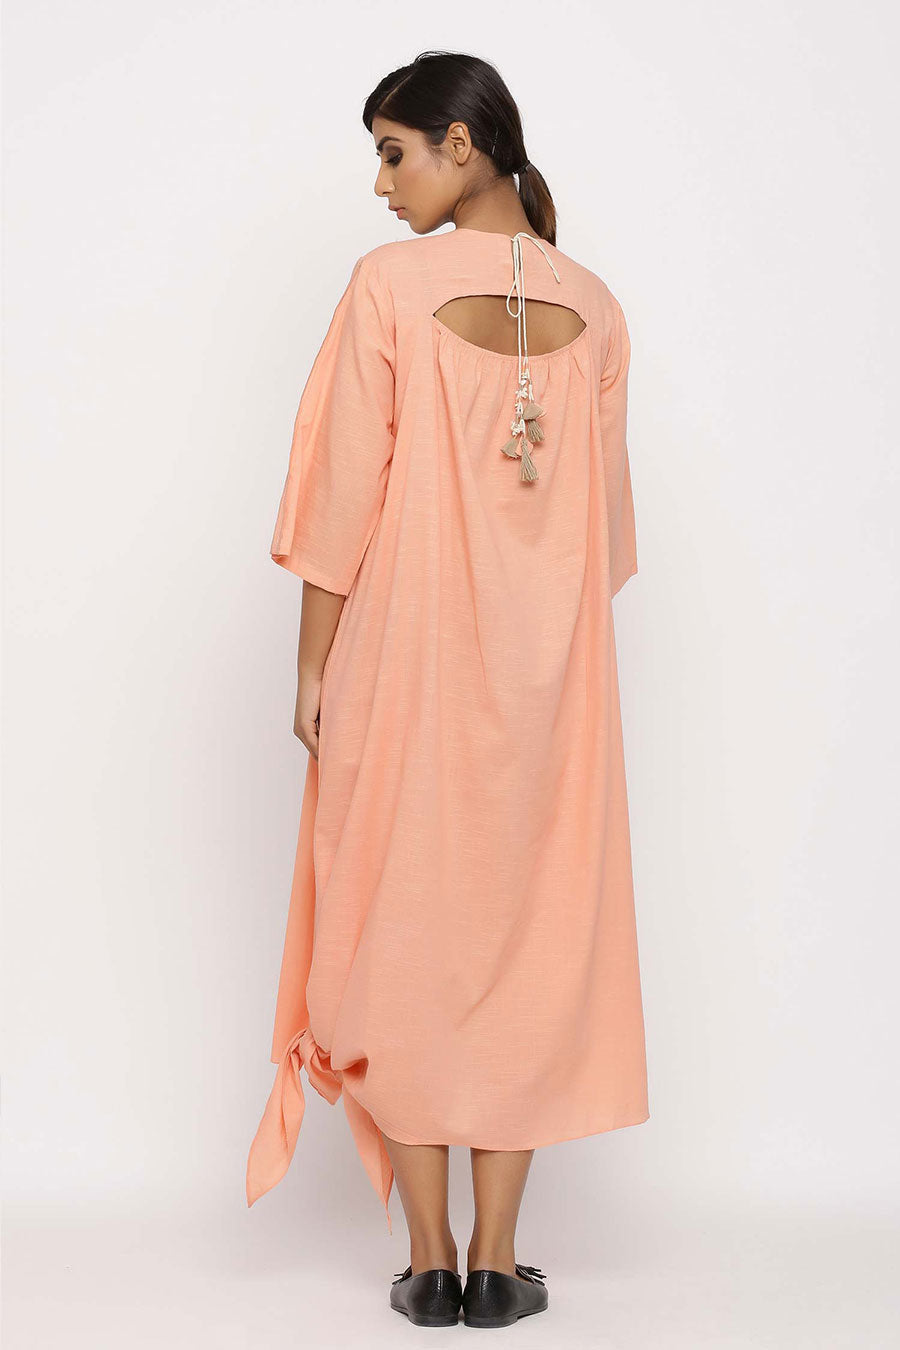 Baro Blush Embroidered Dress